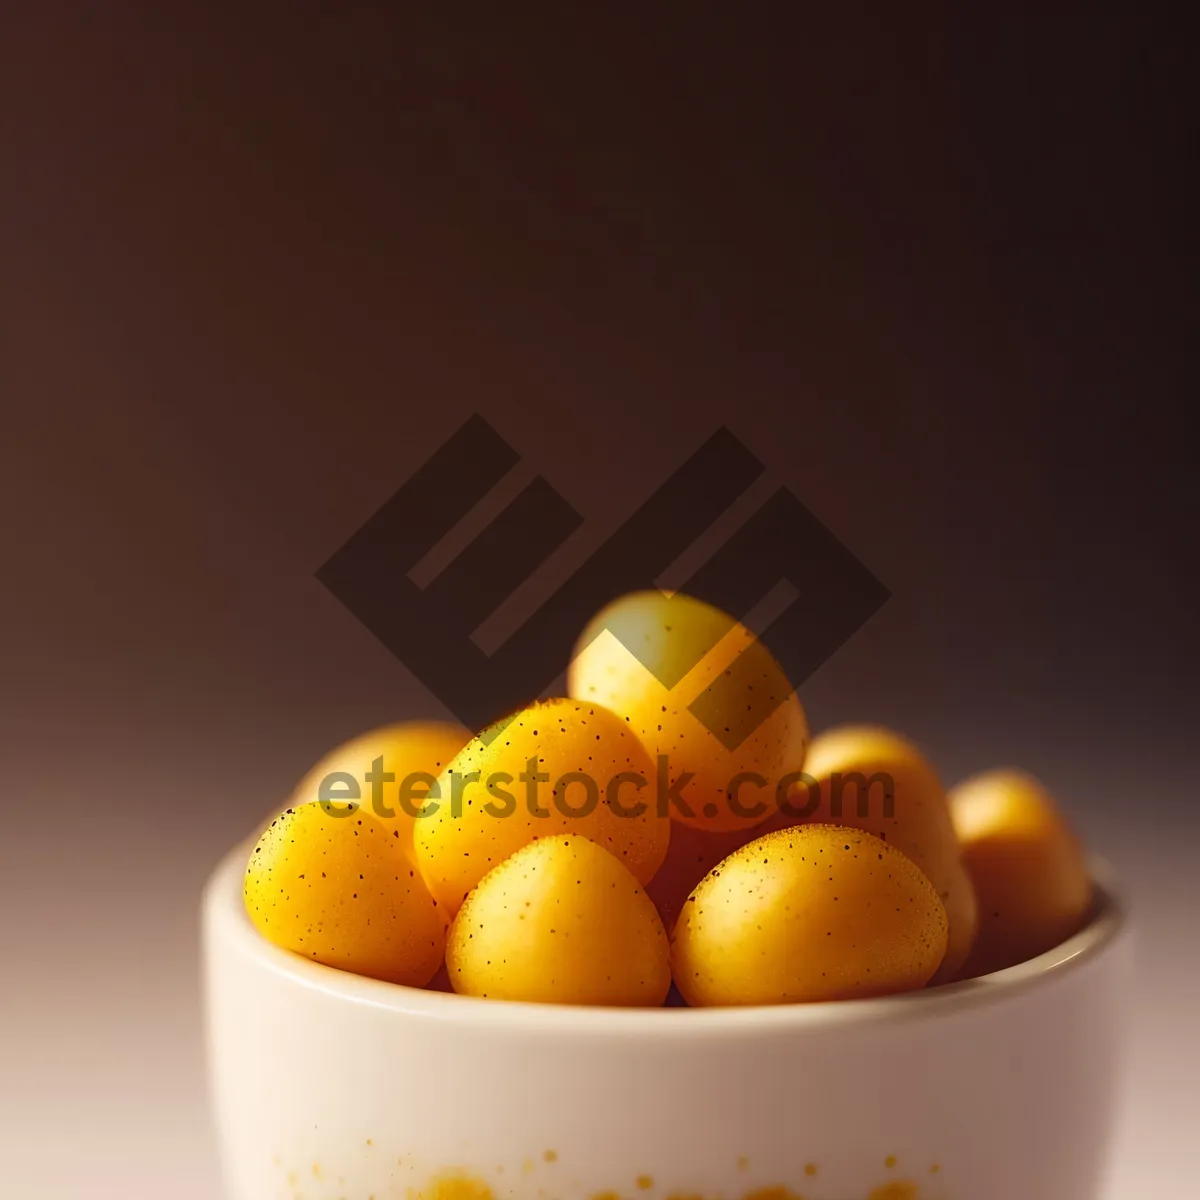 Picture of Juicy Citrus Delight: Fresh, Sweet Kumquat and Tangerine